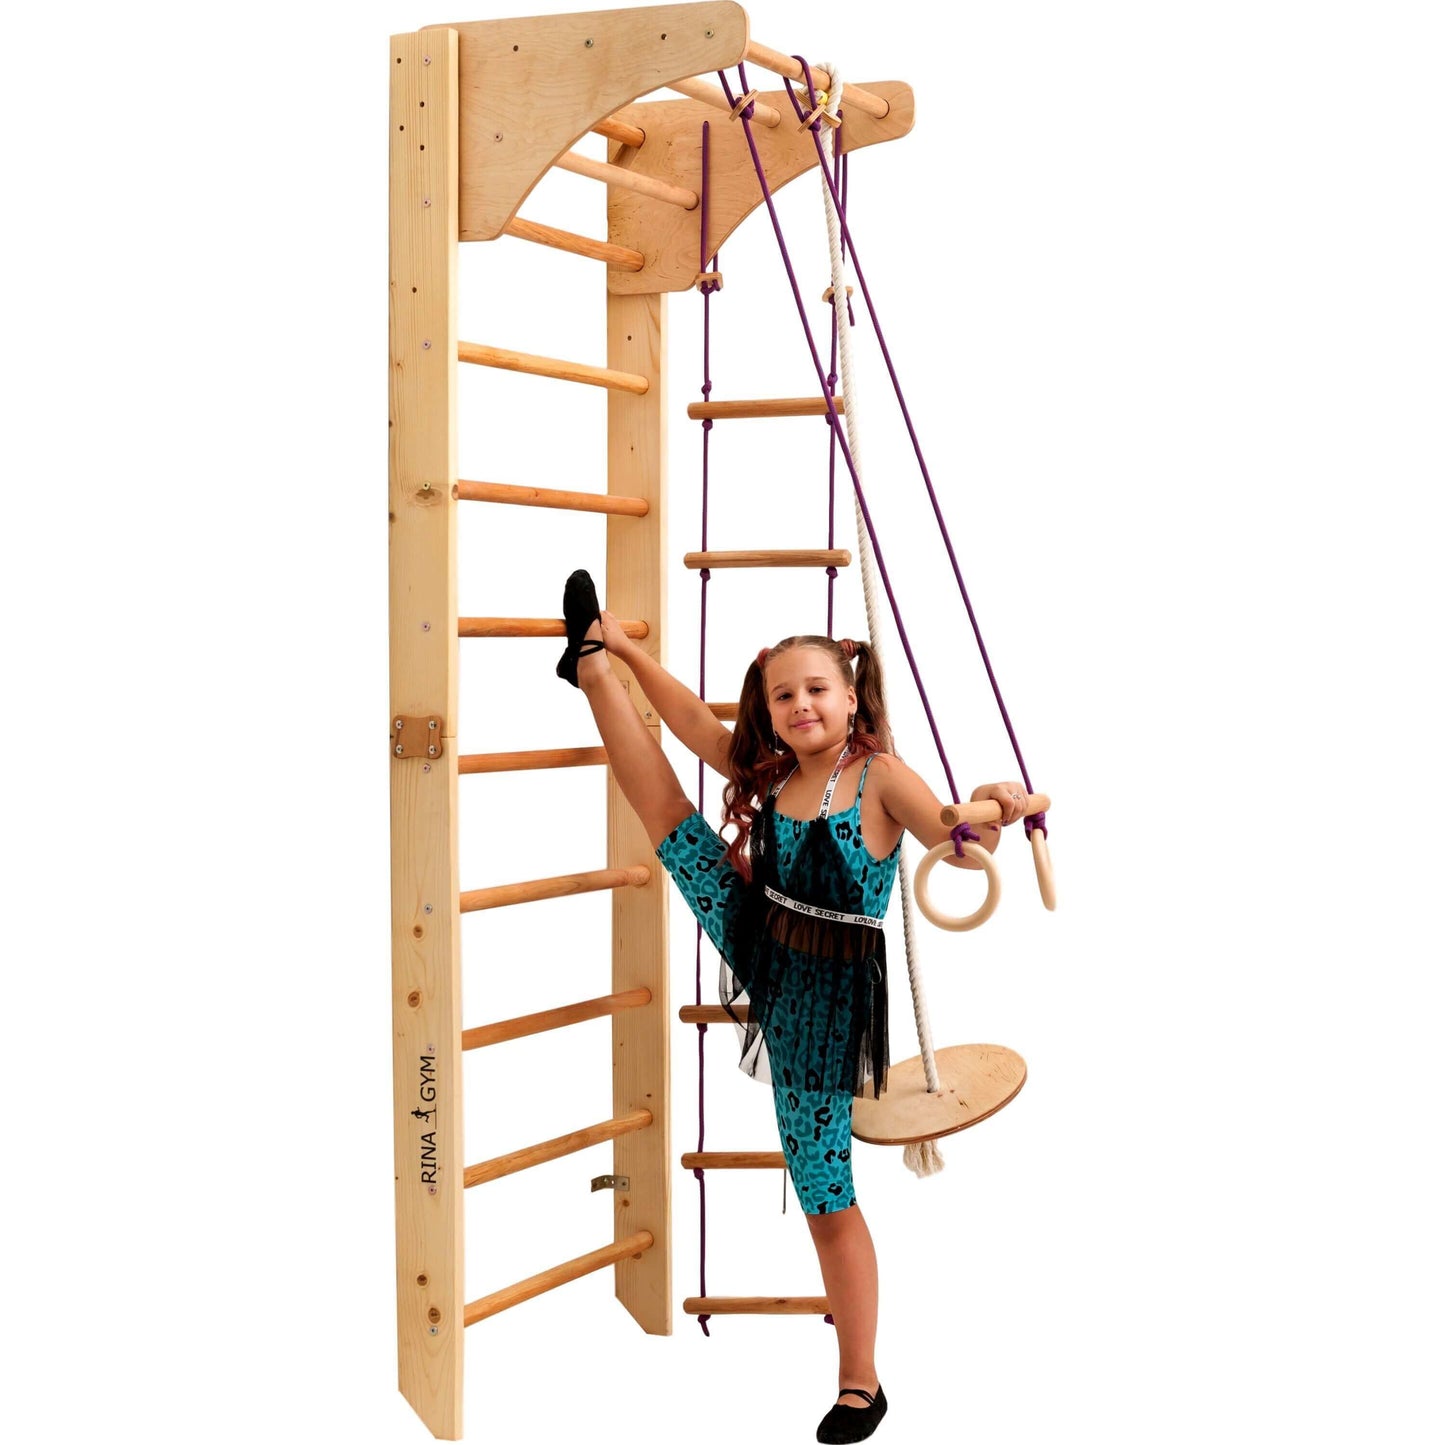 LARA climbing wall for children, untreated wood